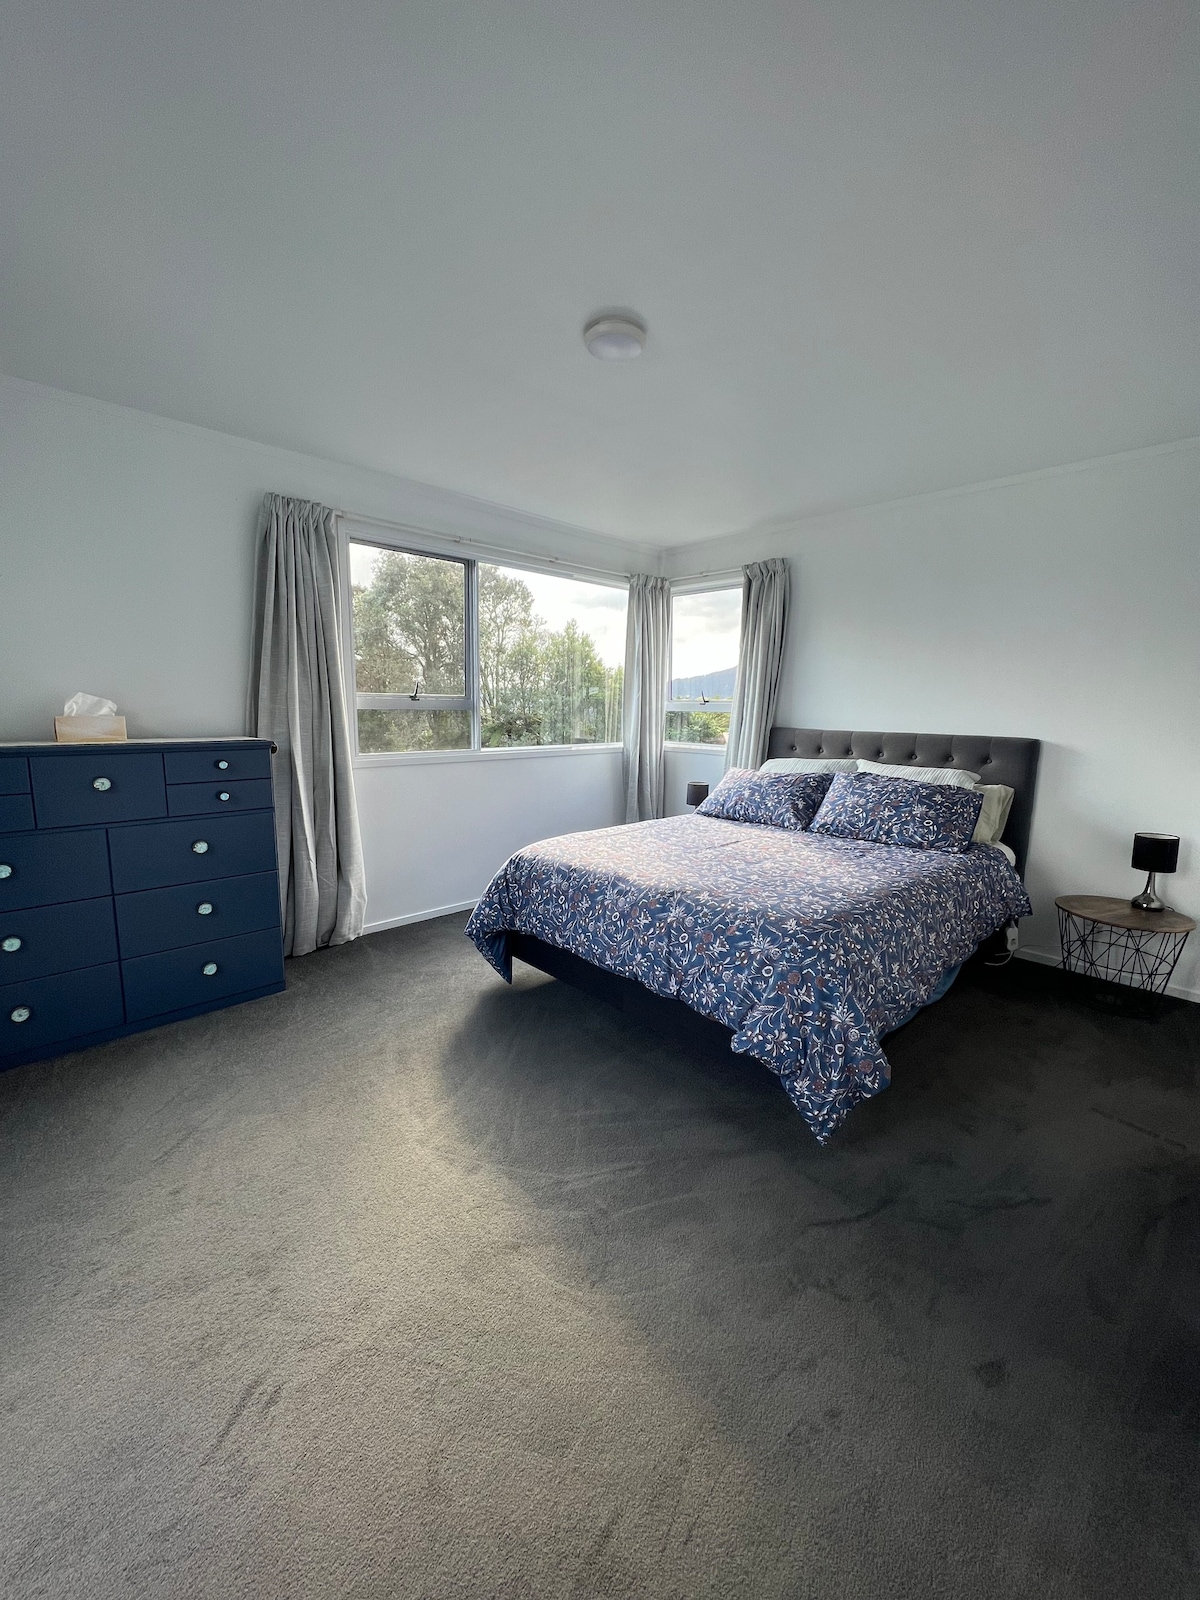 Rotoiti Lake House, Gisborne Point
- 3 Bedroom